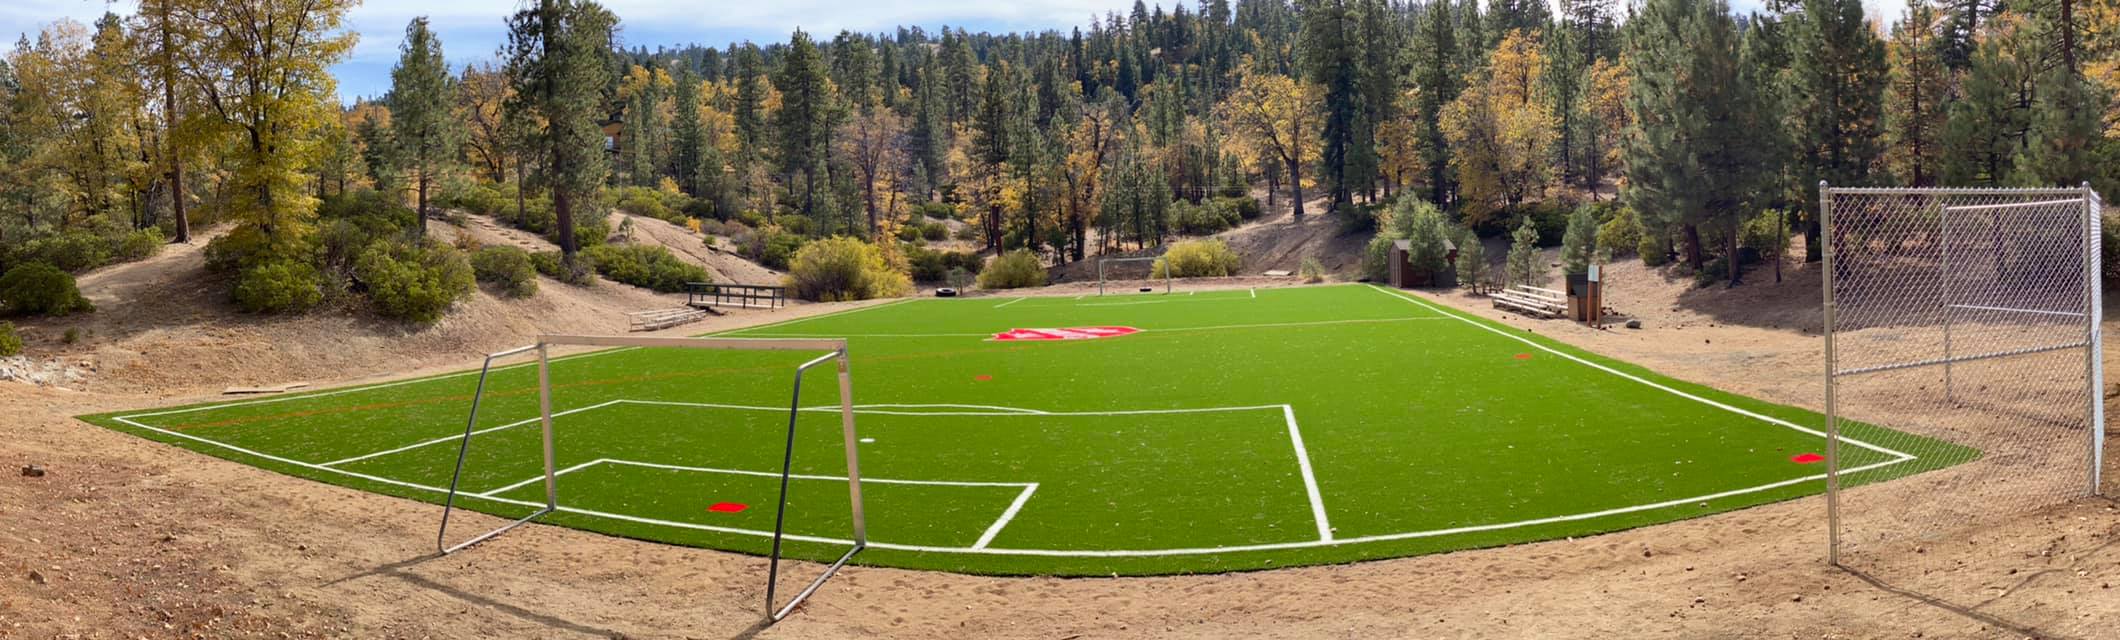 Artificial Grass for Sports Fields, Green-R Turf of Ventura, CA